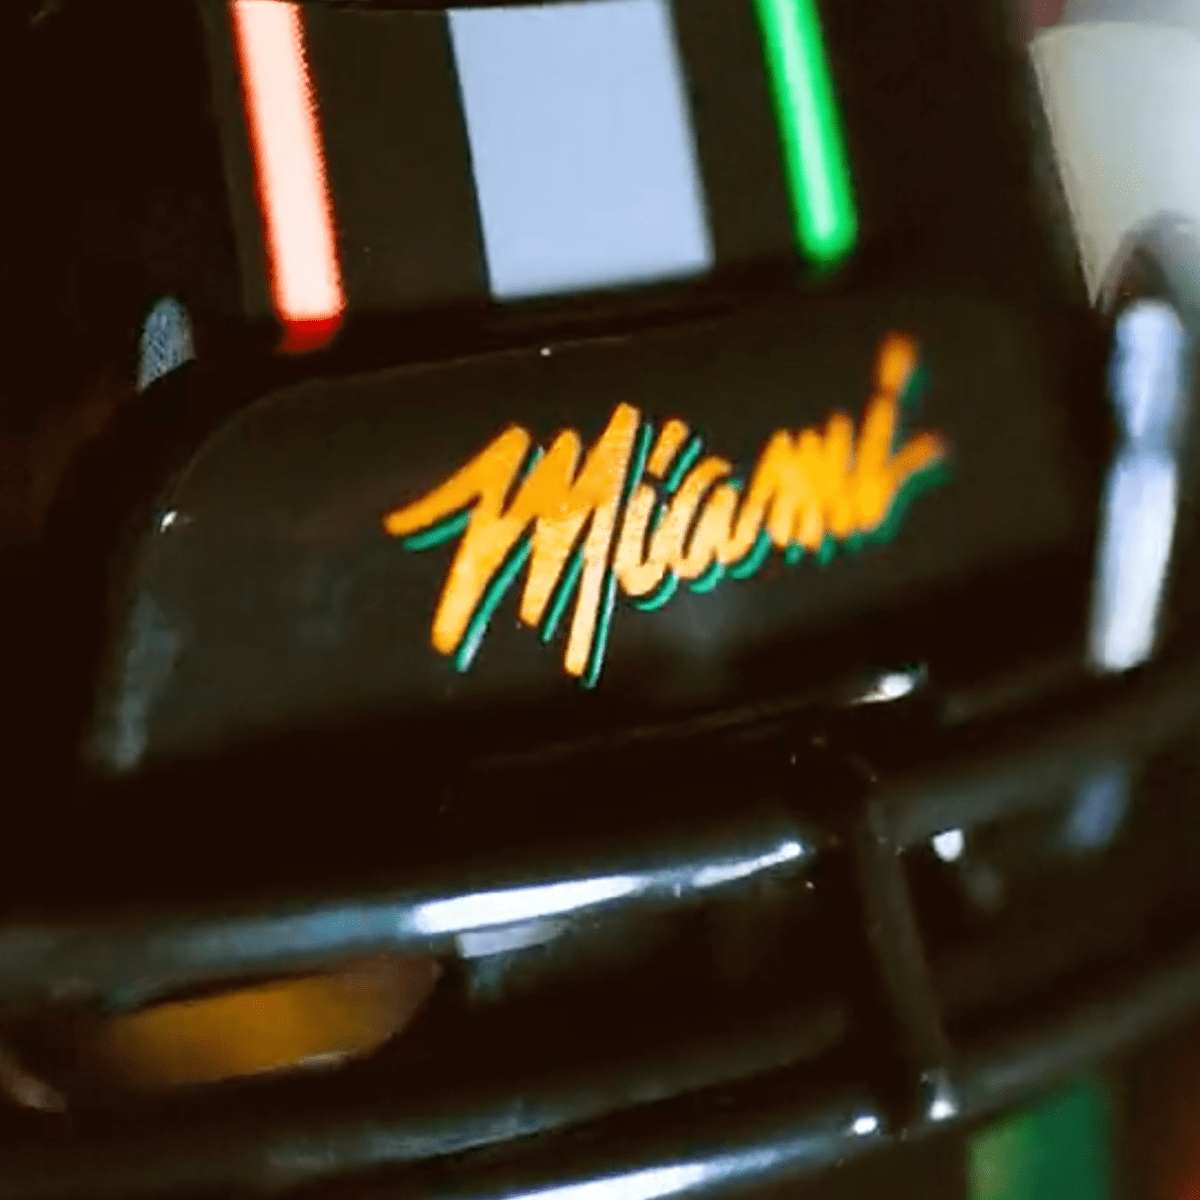 Miami unveils green, black alternate uniforms - Footballscoop